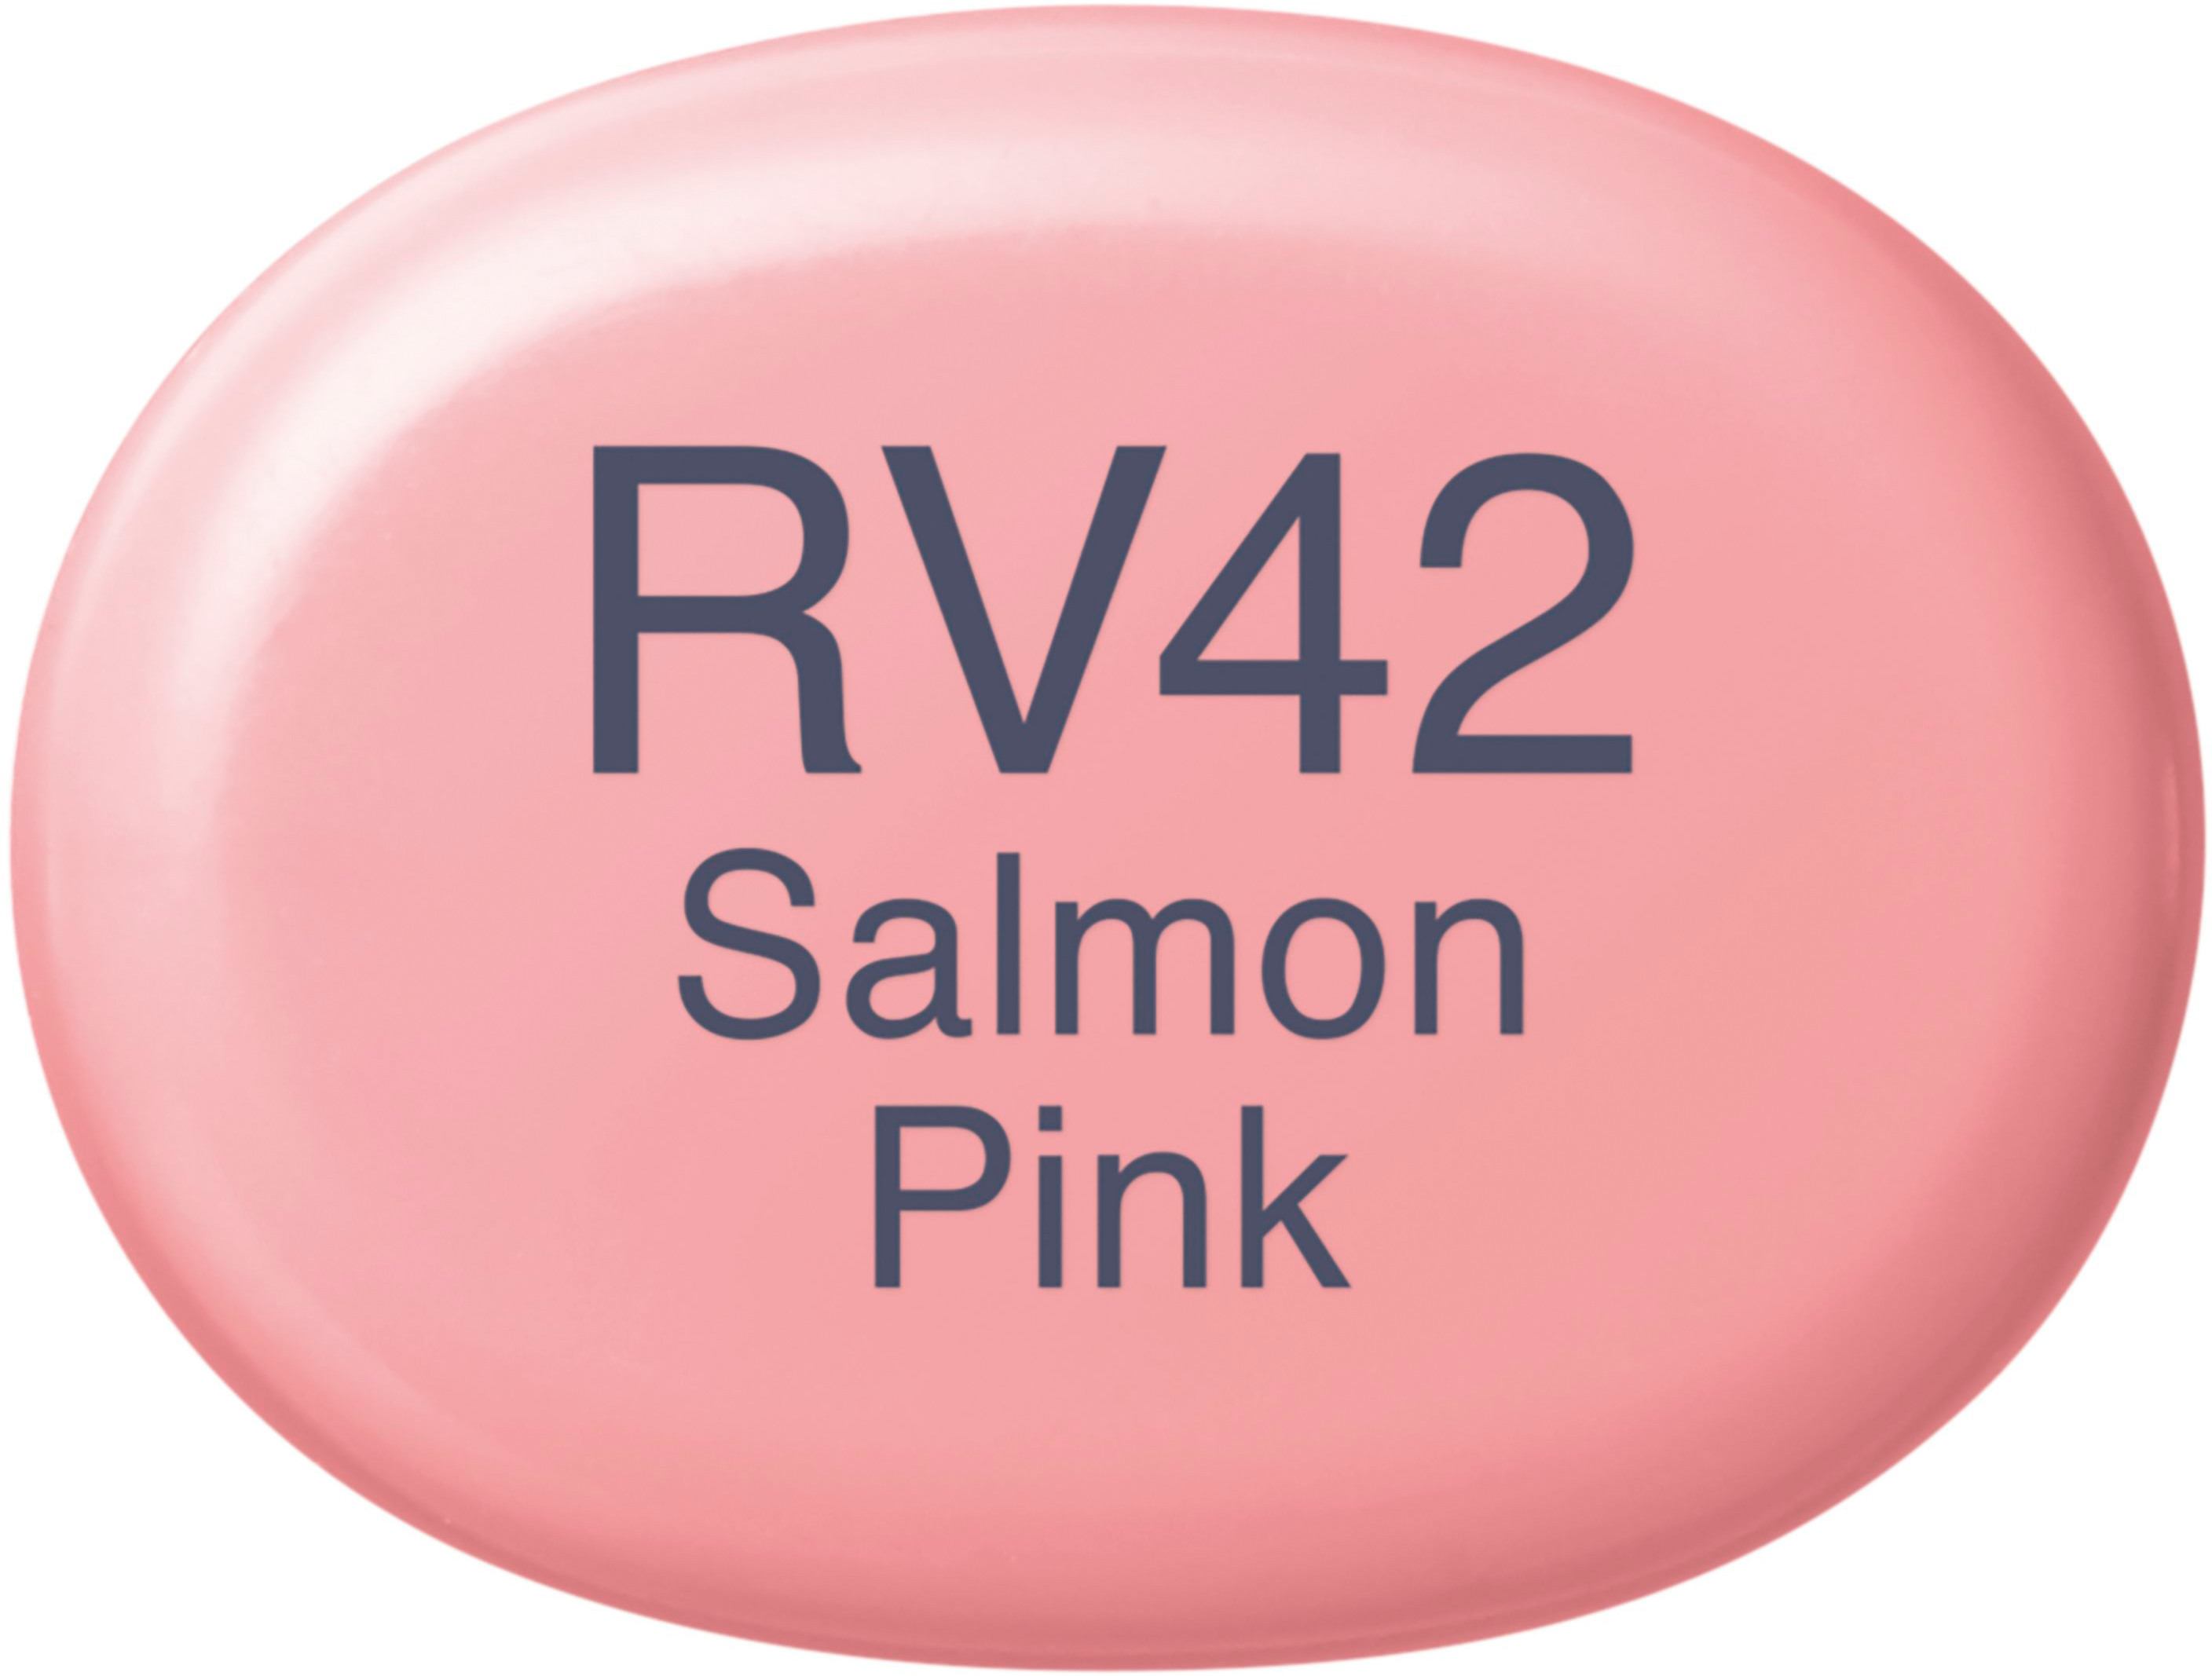 COPIC Marker Sketch 21075262 RV42 - Salmon Pink